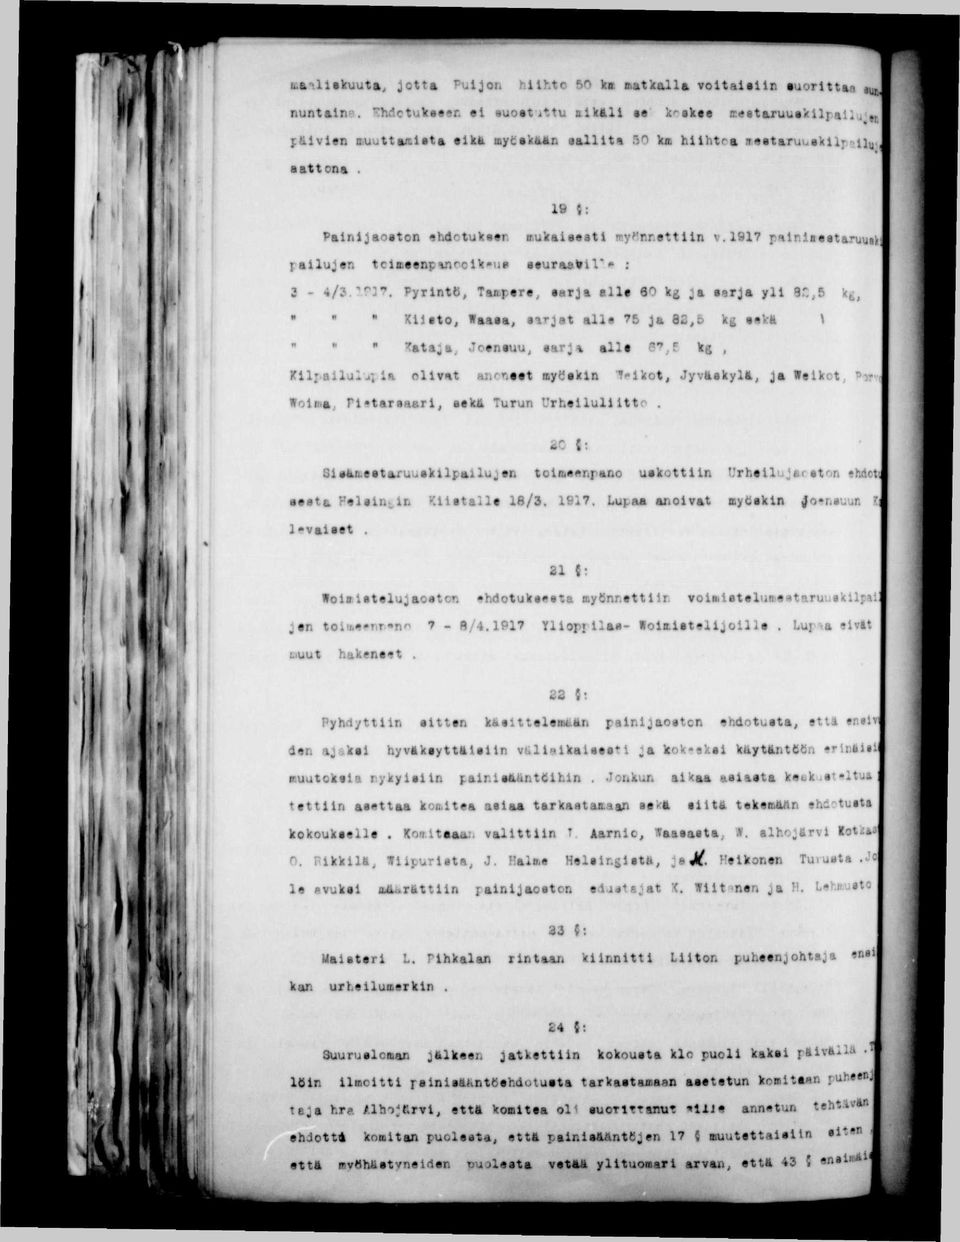 nukalaaatl myhnrettlln v.1917 palnlaaatamuik pallujan tcimaanpvipclk^ua aauraateil"'* : 2-4/3.